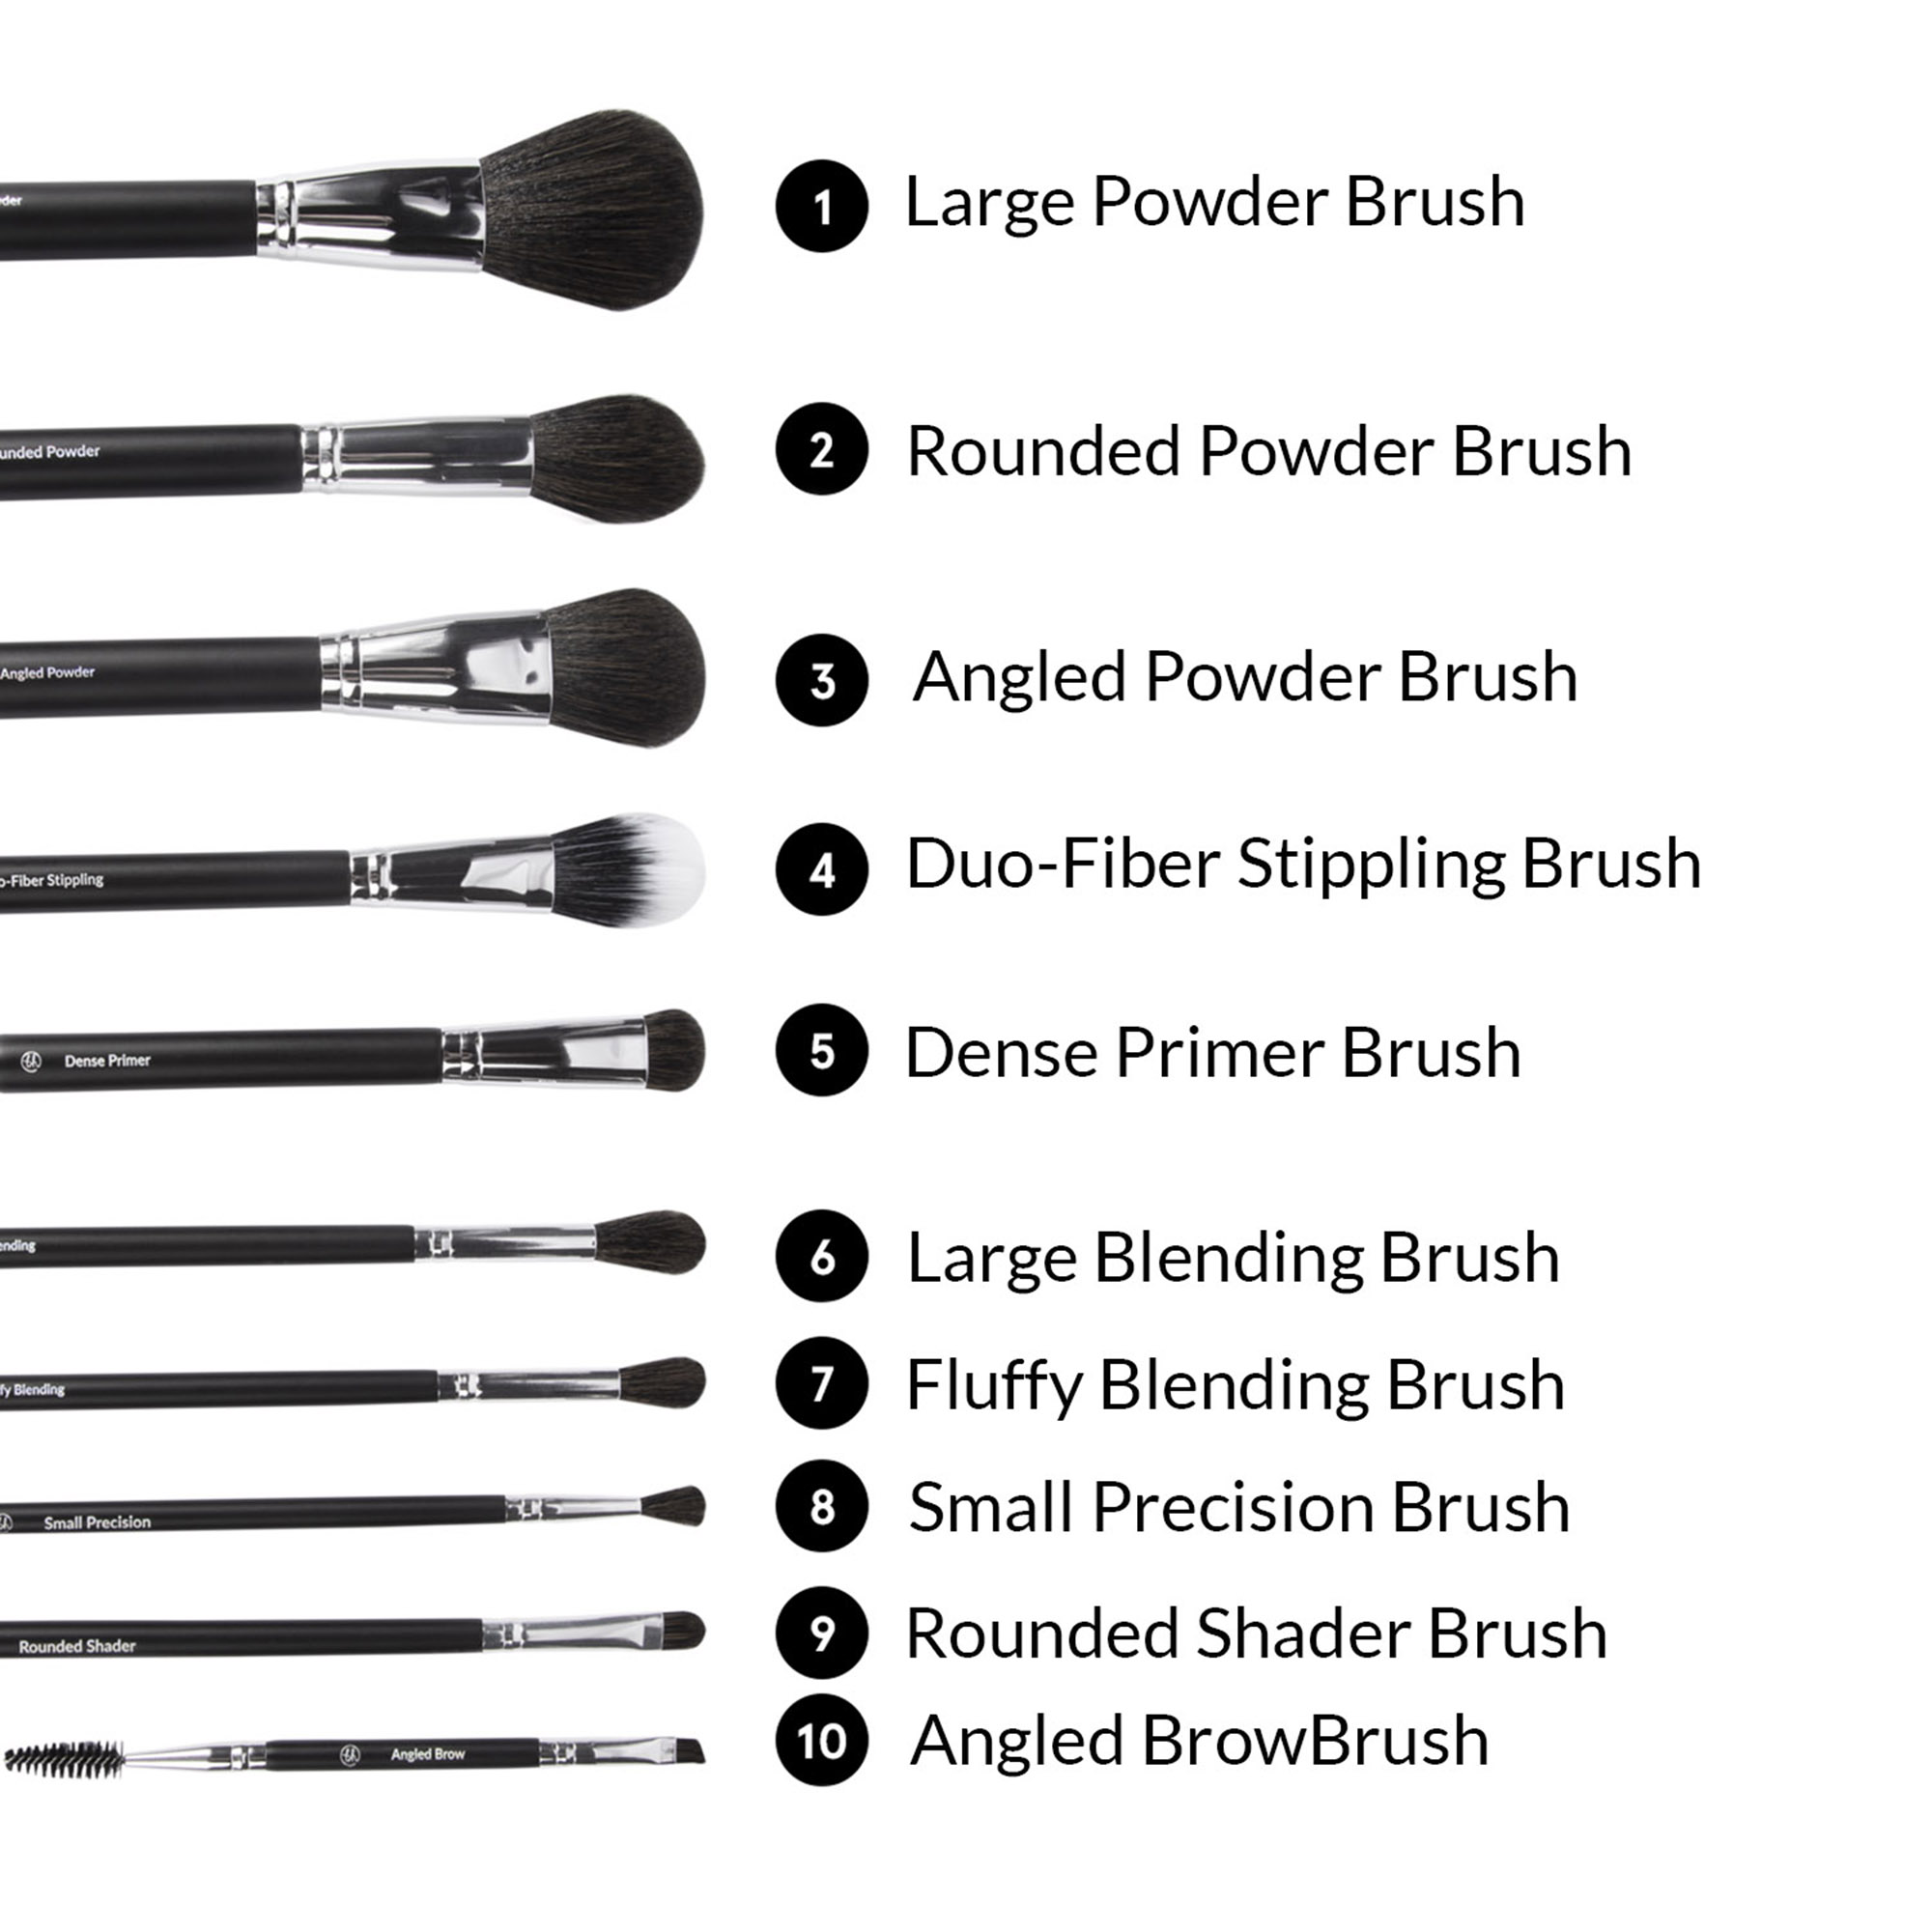 1 Large Powder Brush, 2 Rounded Powder Brush, 3 Angled Powder Brush, 4 Duo-Fiber Stippling Brush, 5 Dense Primer Brush, 6 Dense Primer, 7 Fluffy Blending Brush, 8 Small Precison Brush, 9 Rounded Shader Brush, 10 Angled Brow Brush 